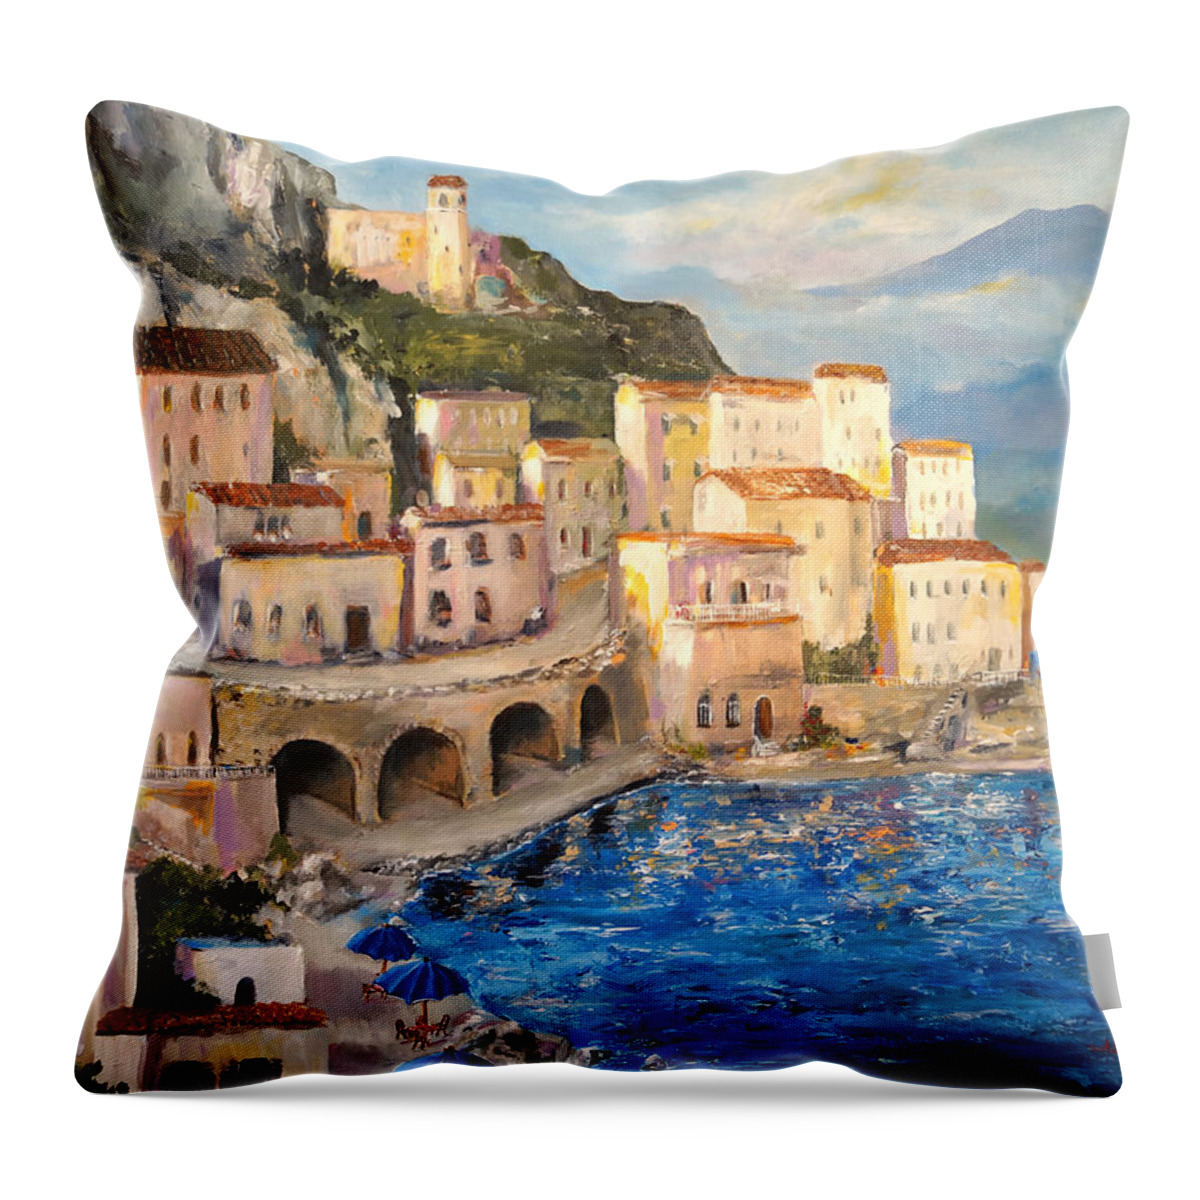 Amalfi Coast Throw Pillow featuring the painting Amalfi Coast Highway by Alan Lakin